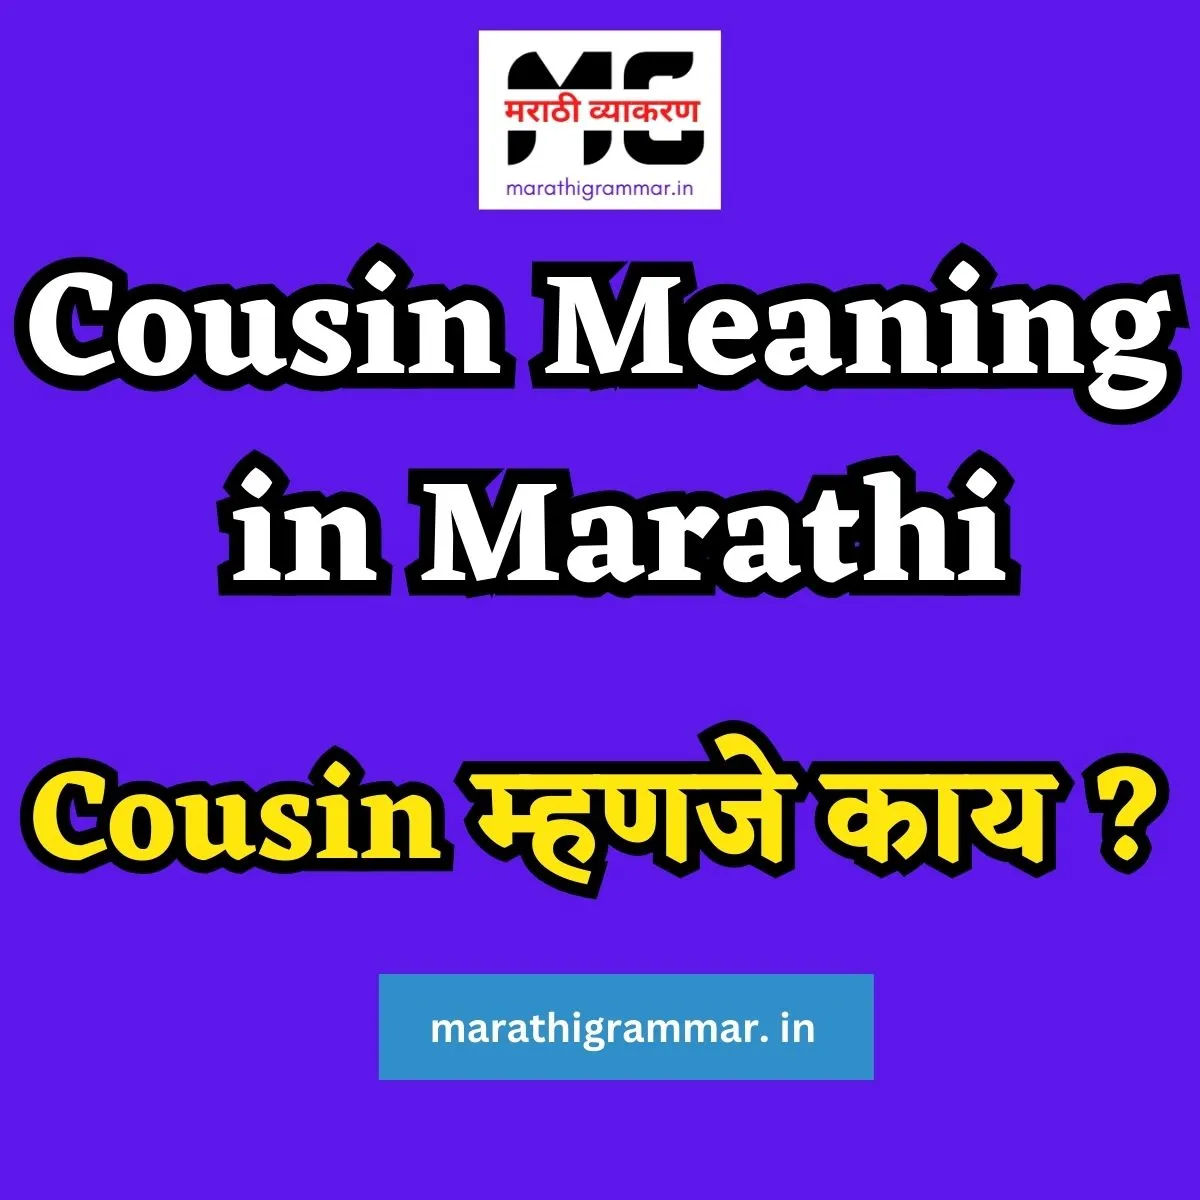 Cousin Meaning in Marathi | Cousin म्हणजे काय ?